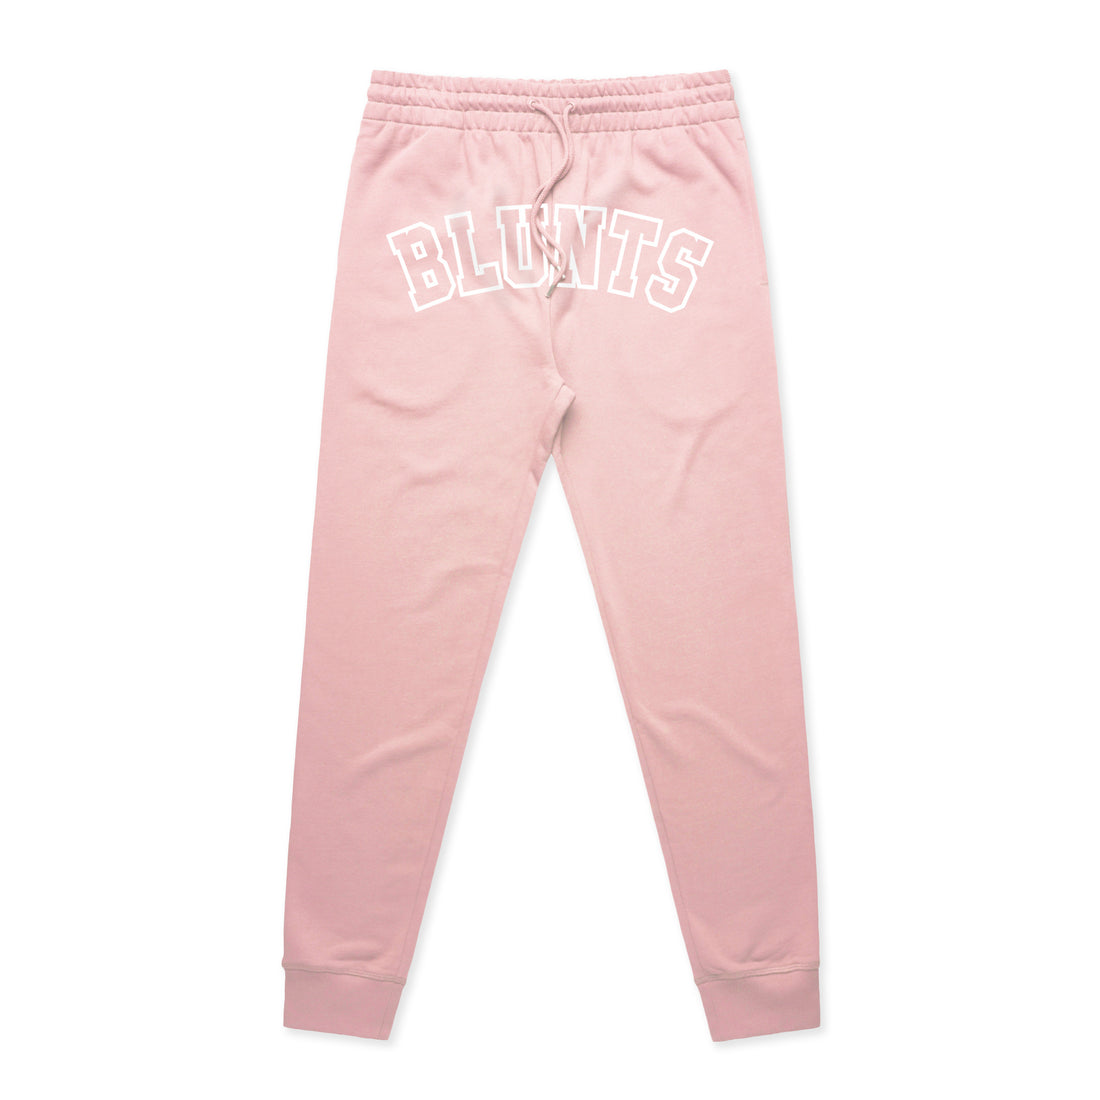 Blunts and Blondes - BLUNTS - Premium Pale Pink Joggers